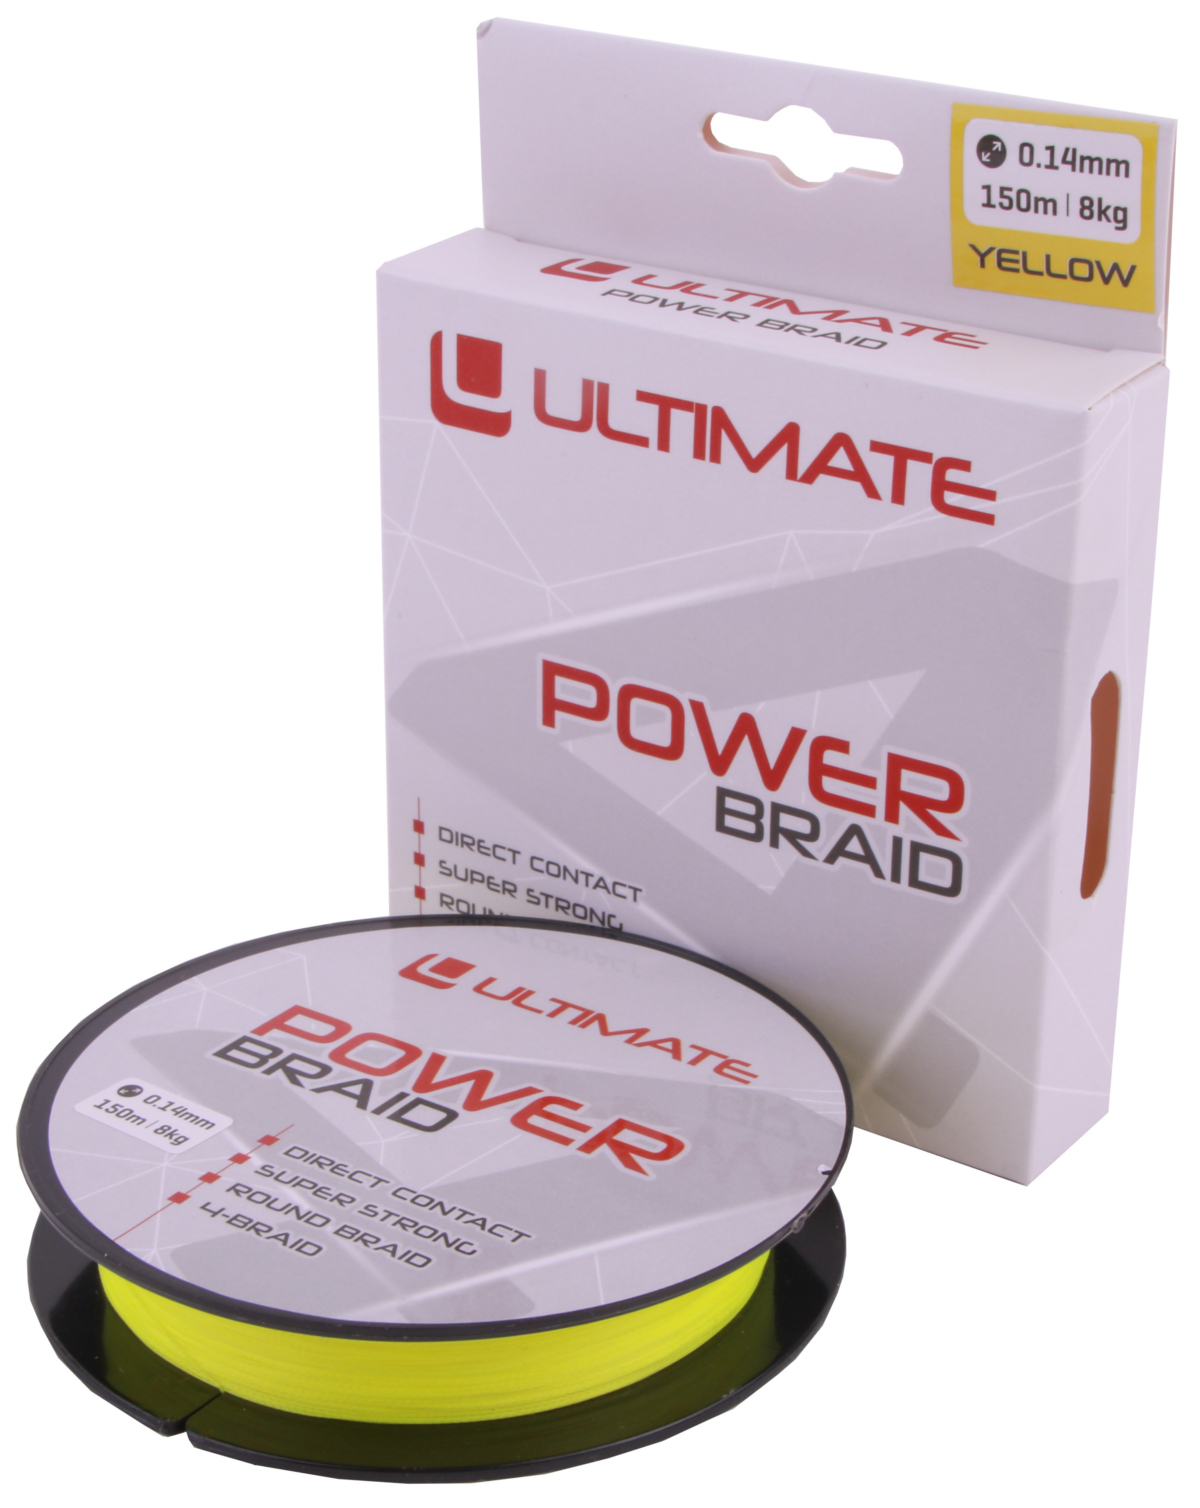 Ultimate Power Braid 0.14mm 8kg 150m Yellow